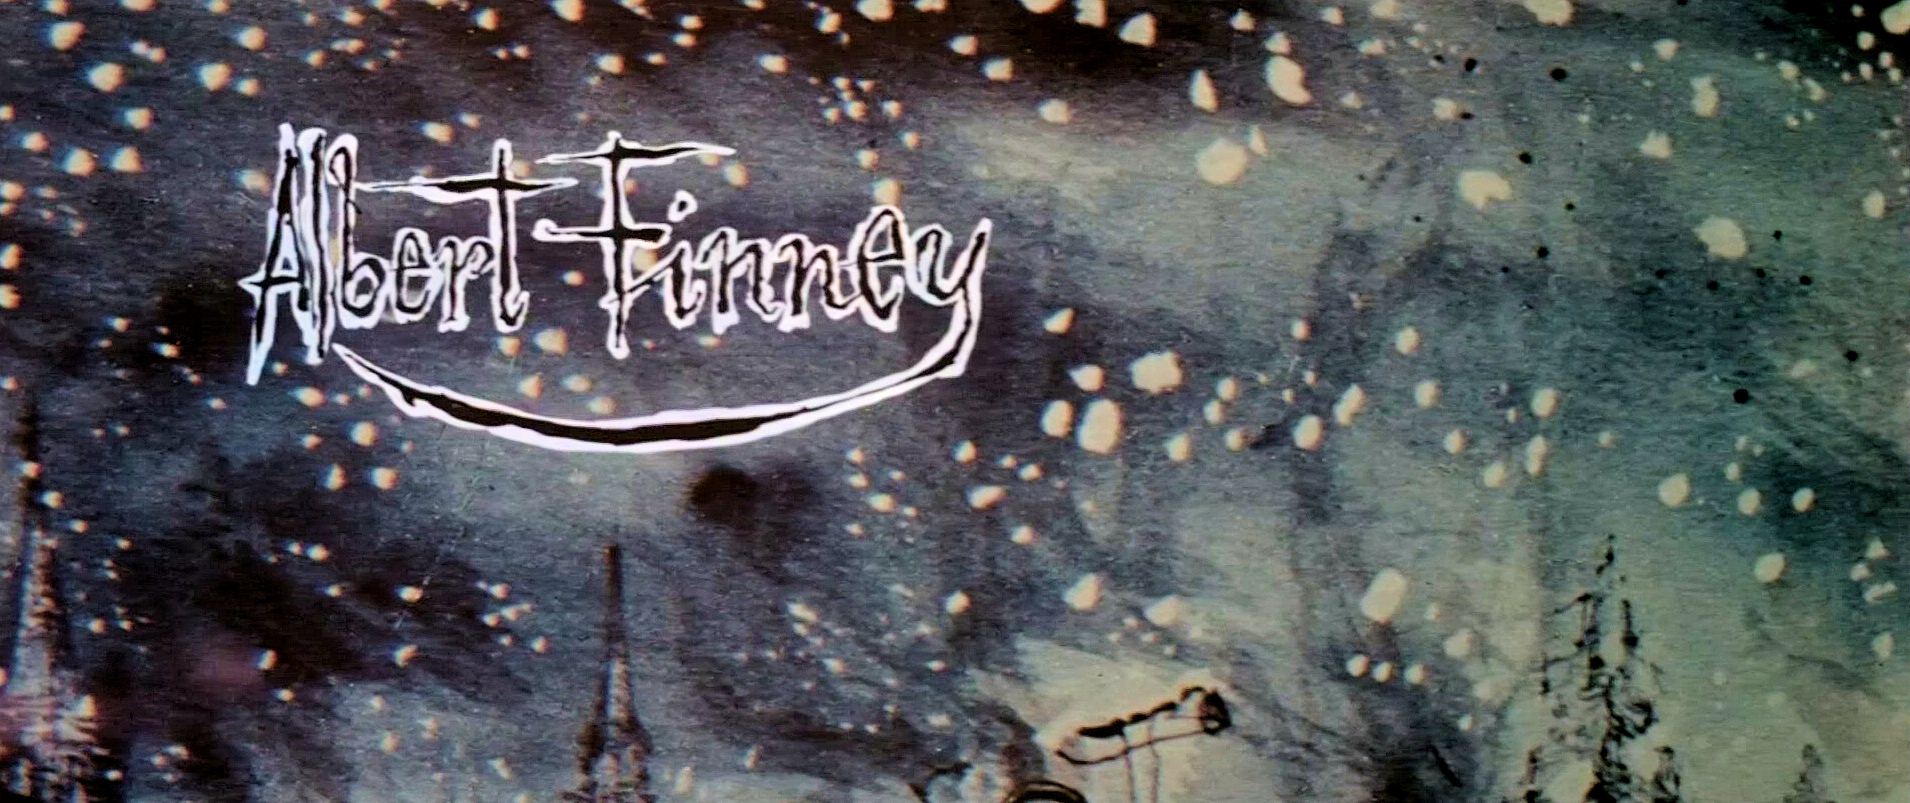 Main title from Scrooge (1970) (3). Albert Finney